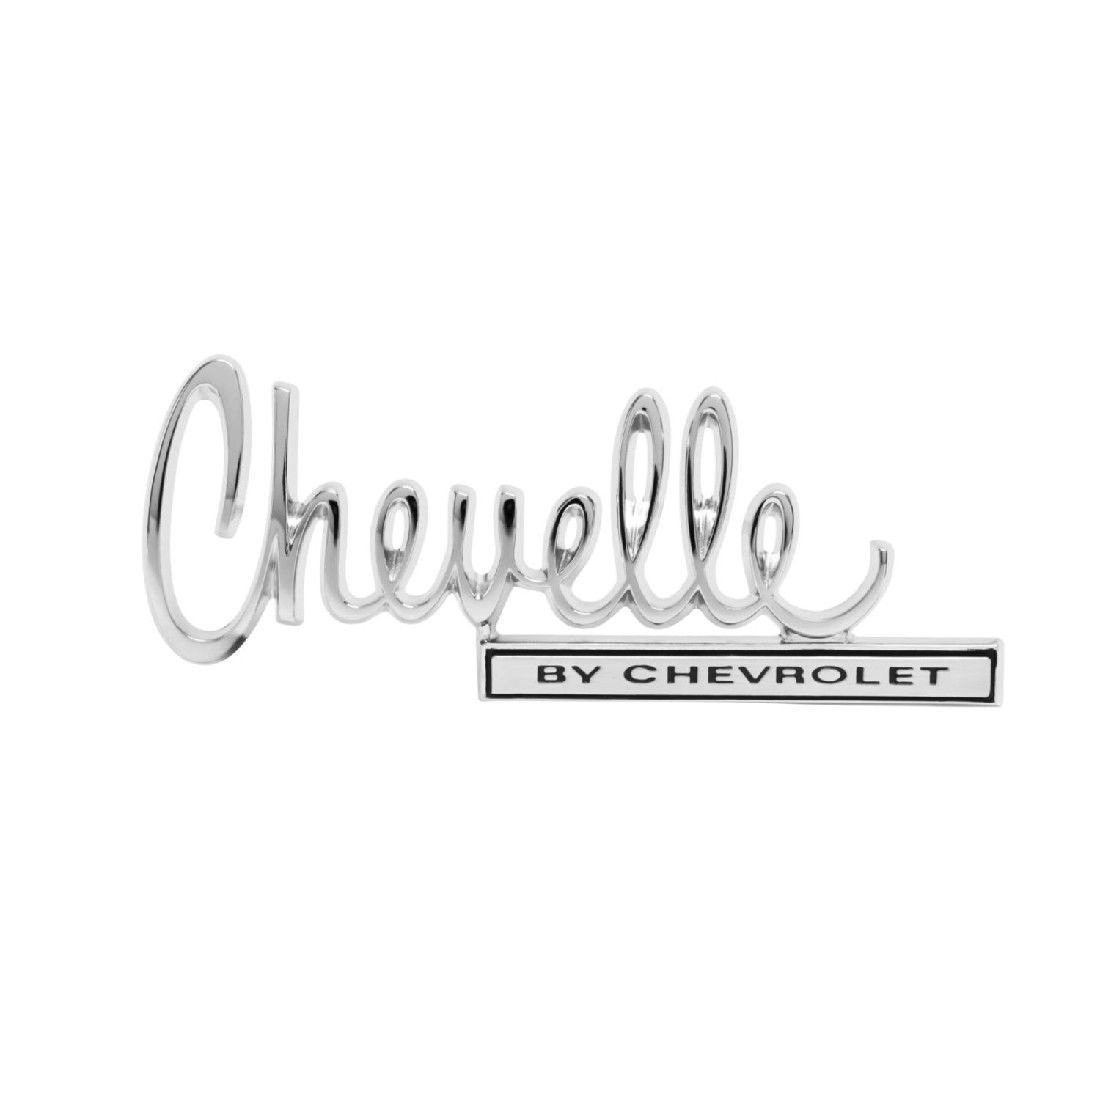 1970 Chevelle By Chevrolet Trunk Emblem